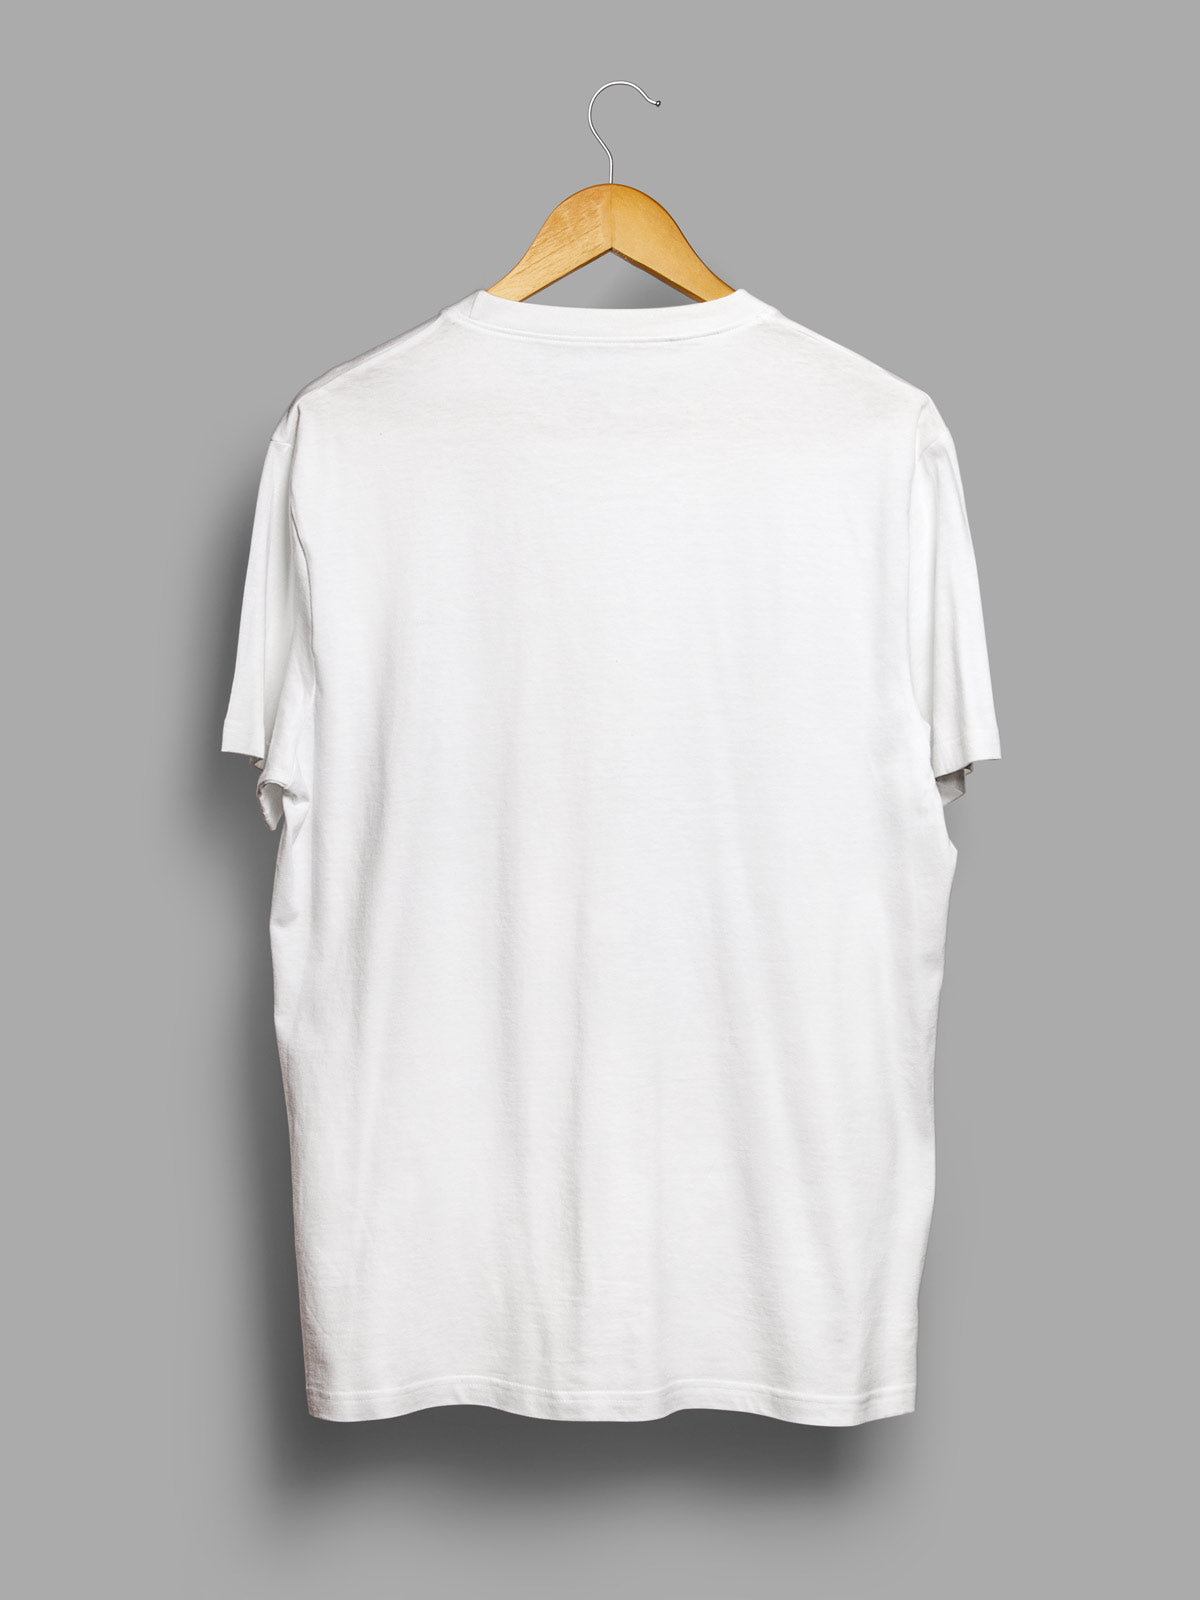 White Unisex Plain T shirt  by shopghumakkad